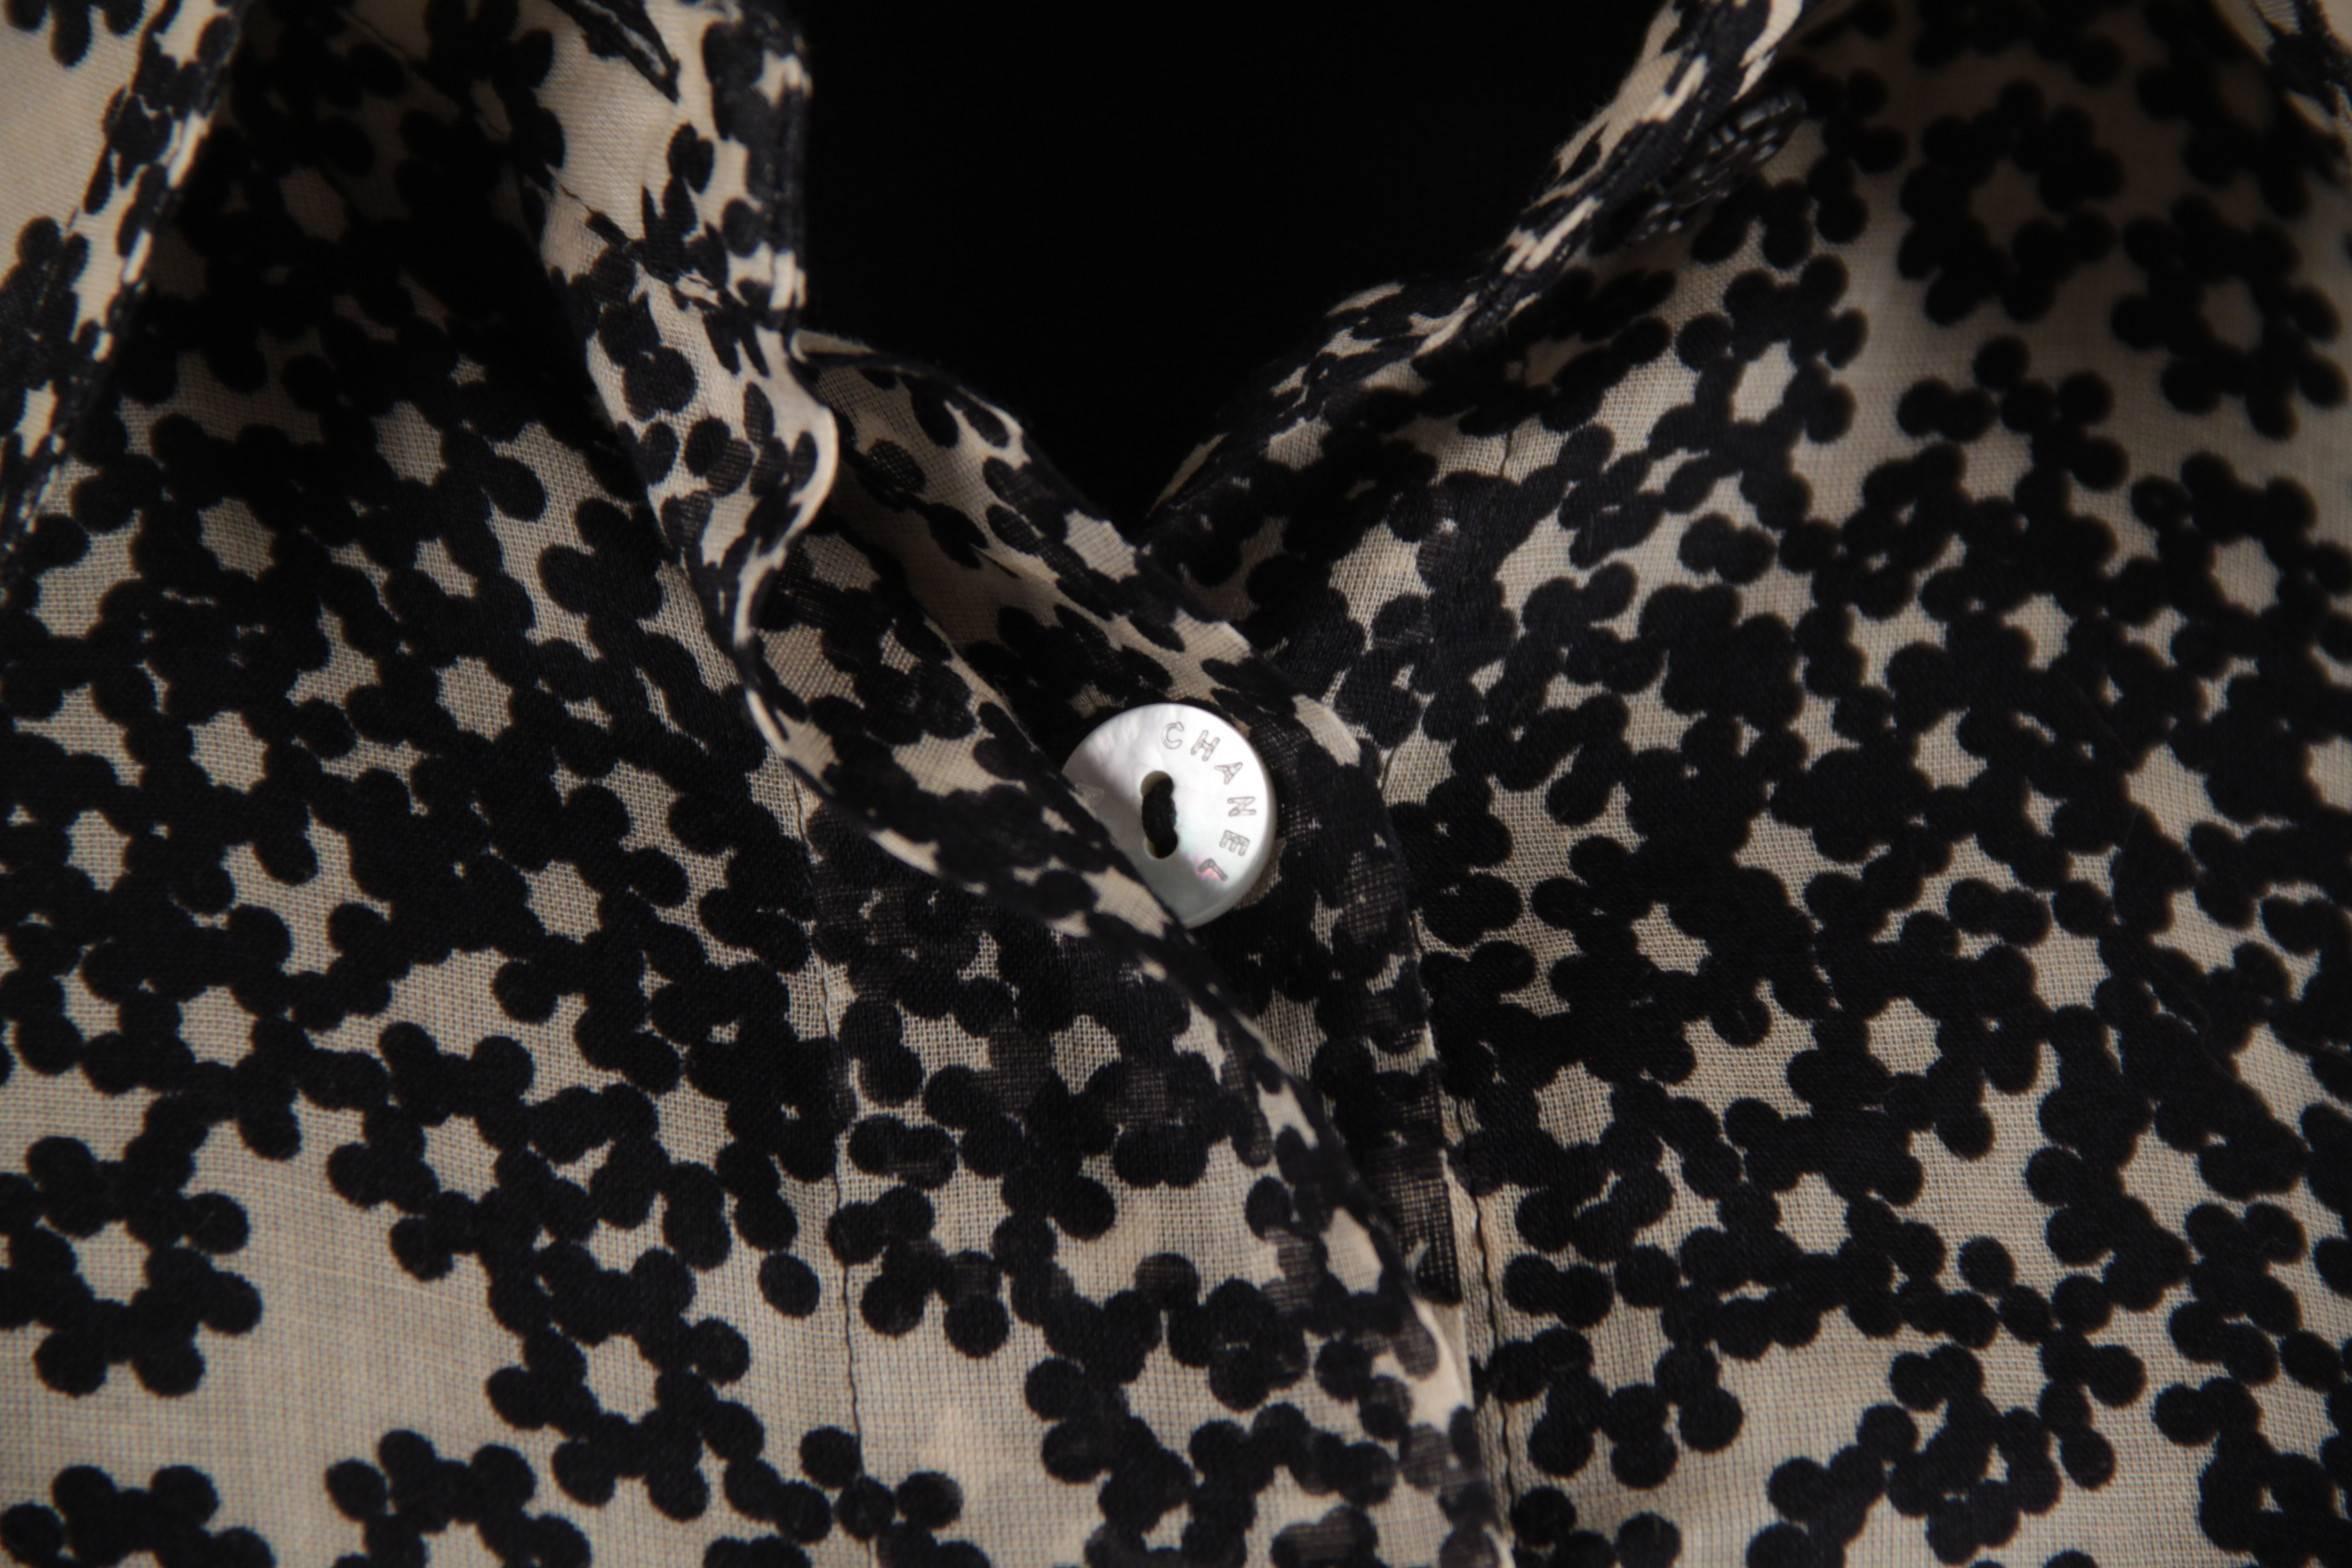 Women's CHANEL Beige & Black FLORAL Pure Cotton SHIRT Blouse 3/4 Sleeves SIZE 38